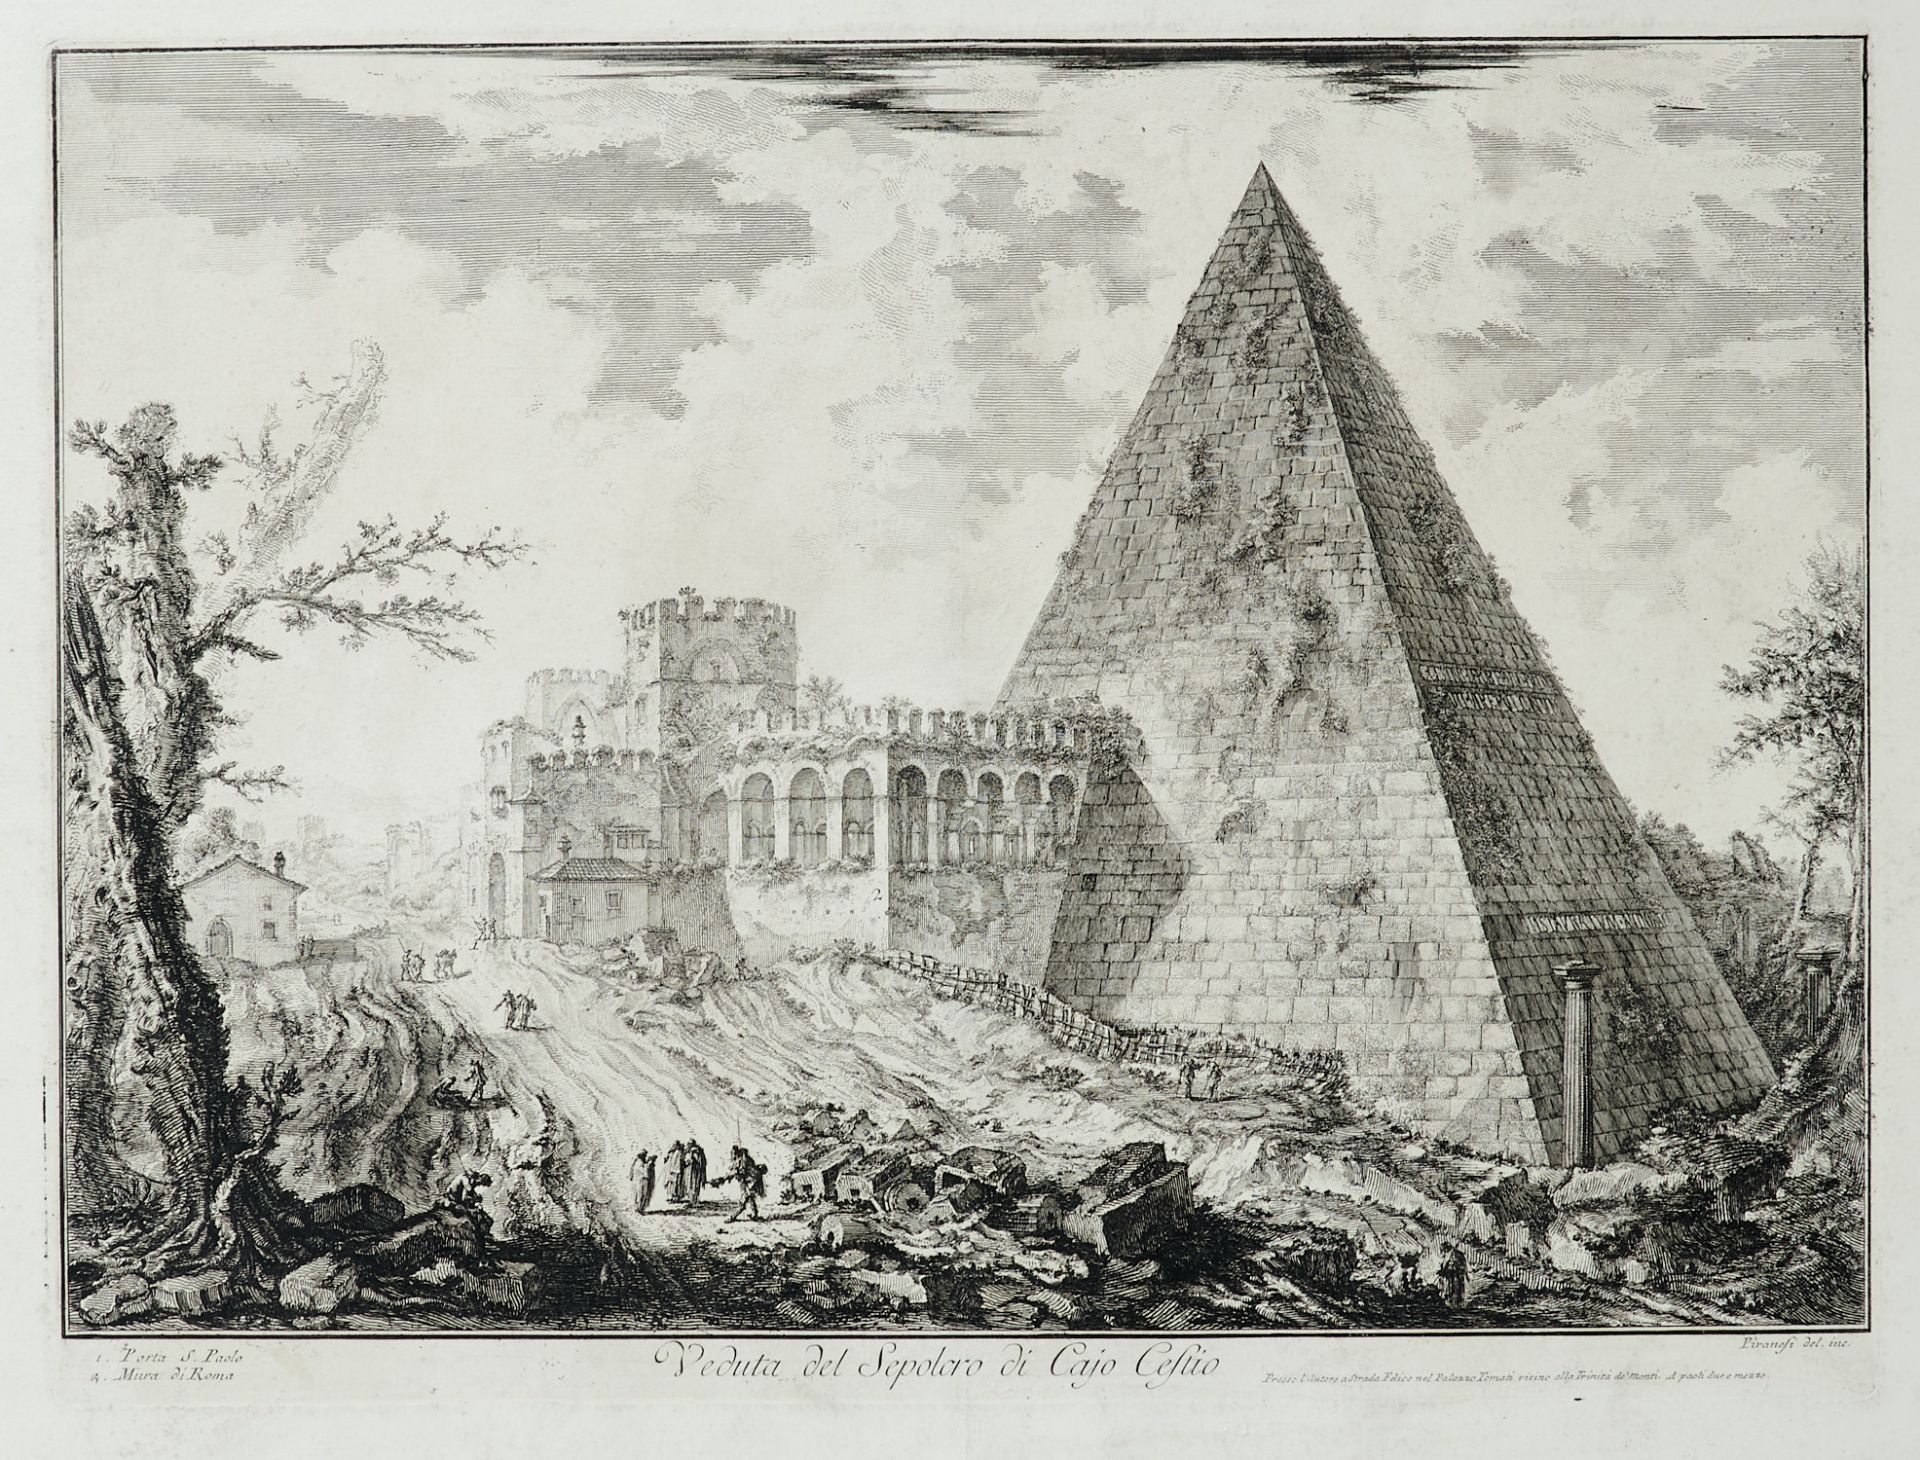 Italien Rom Piranesi - "Veduta del Sepolcro di Cajo Cestio" (Ansicht der Pyramide des Gaius